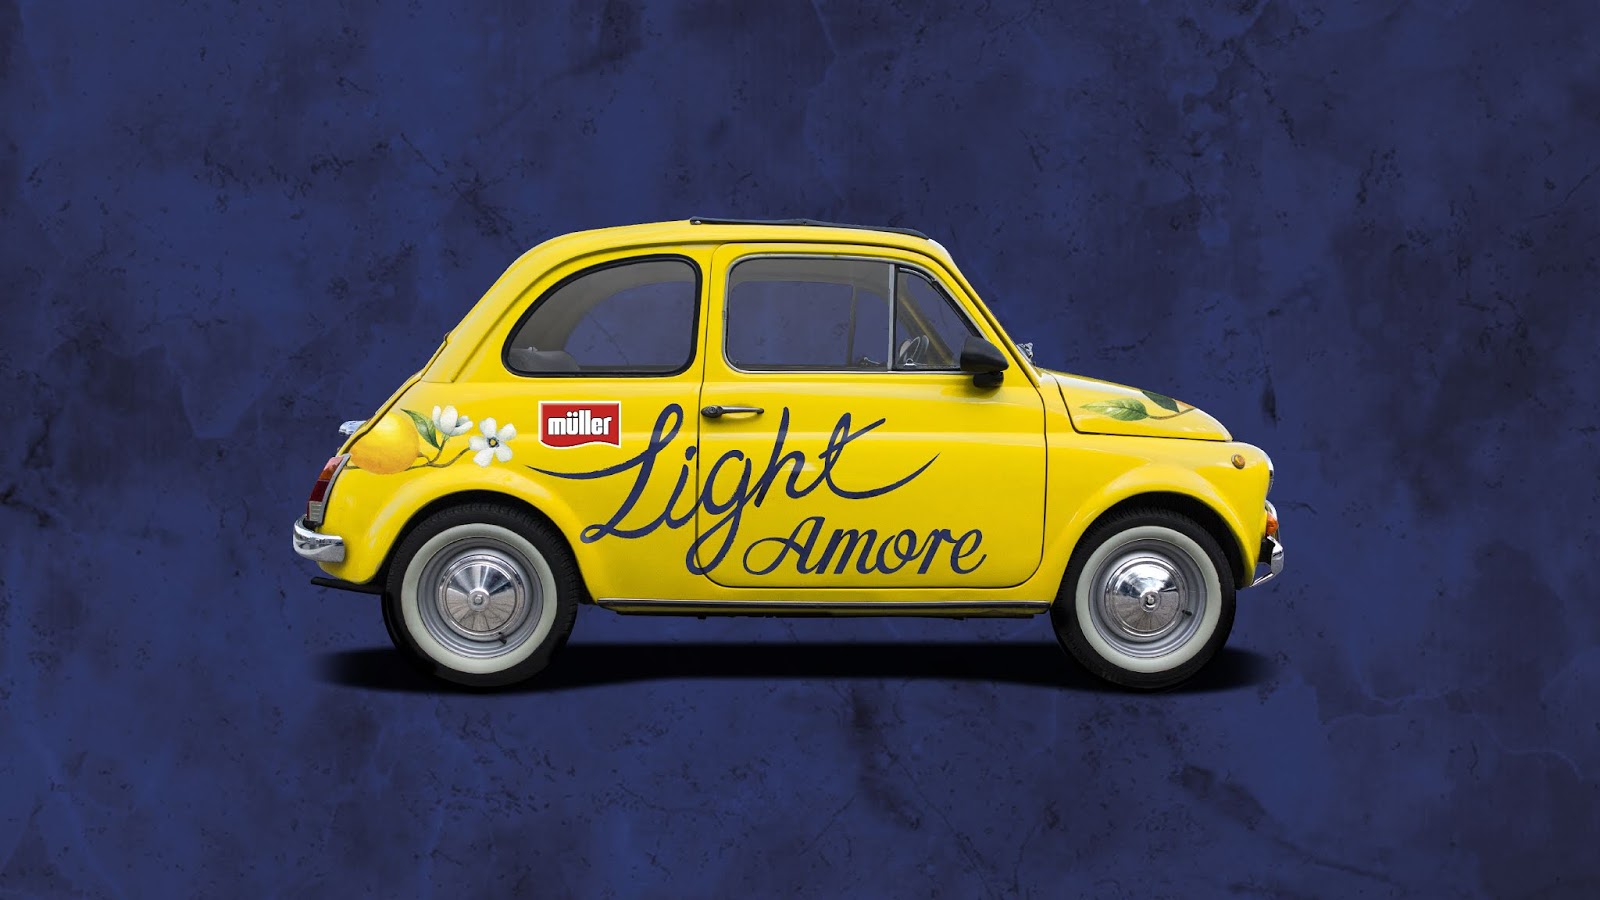 Muller Light Amore意大利风格酸奶包装设计